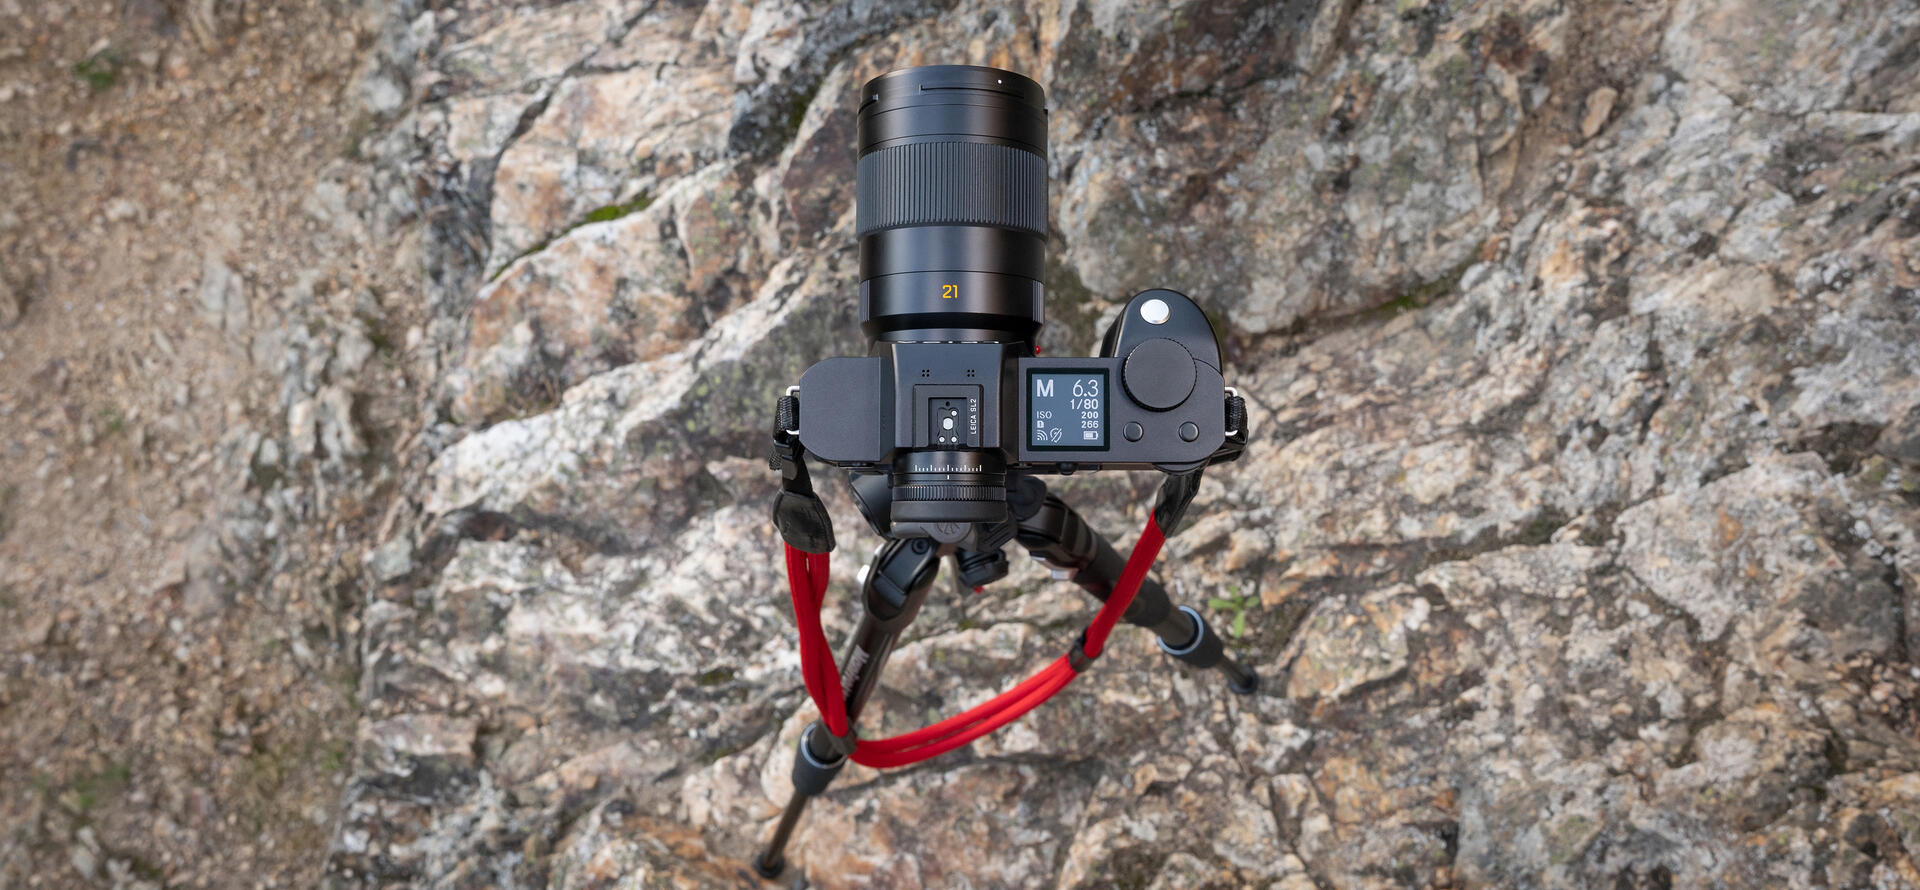 Leica Super-APO-Summicron-SL 21 f/2 ASPH. on a Leica SL2 standing on rocks.